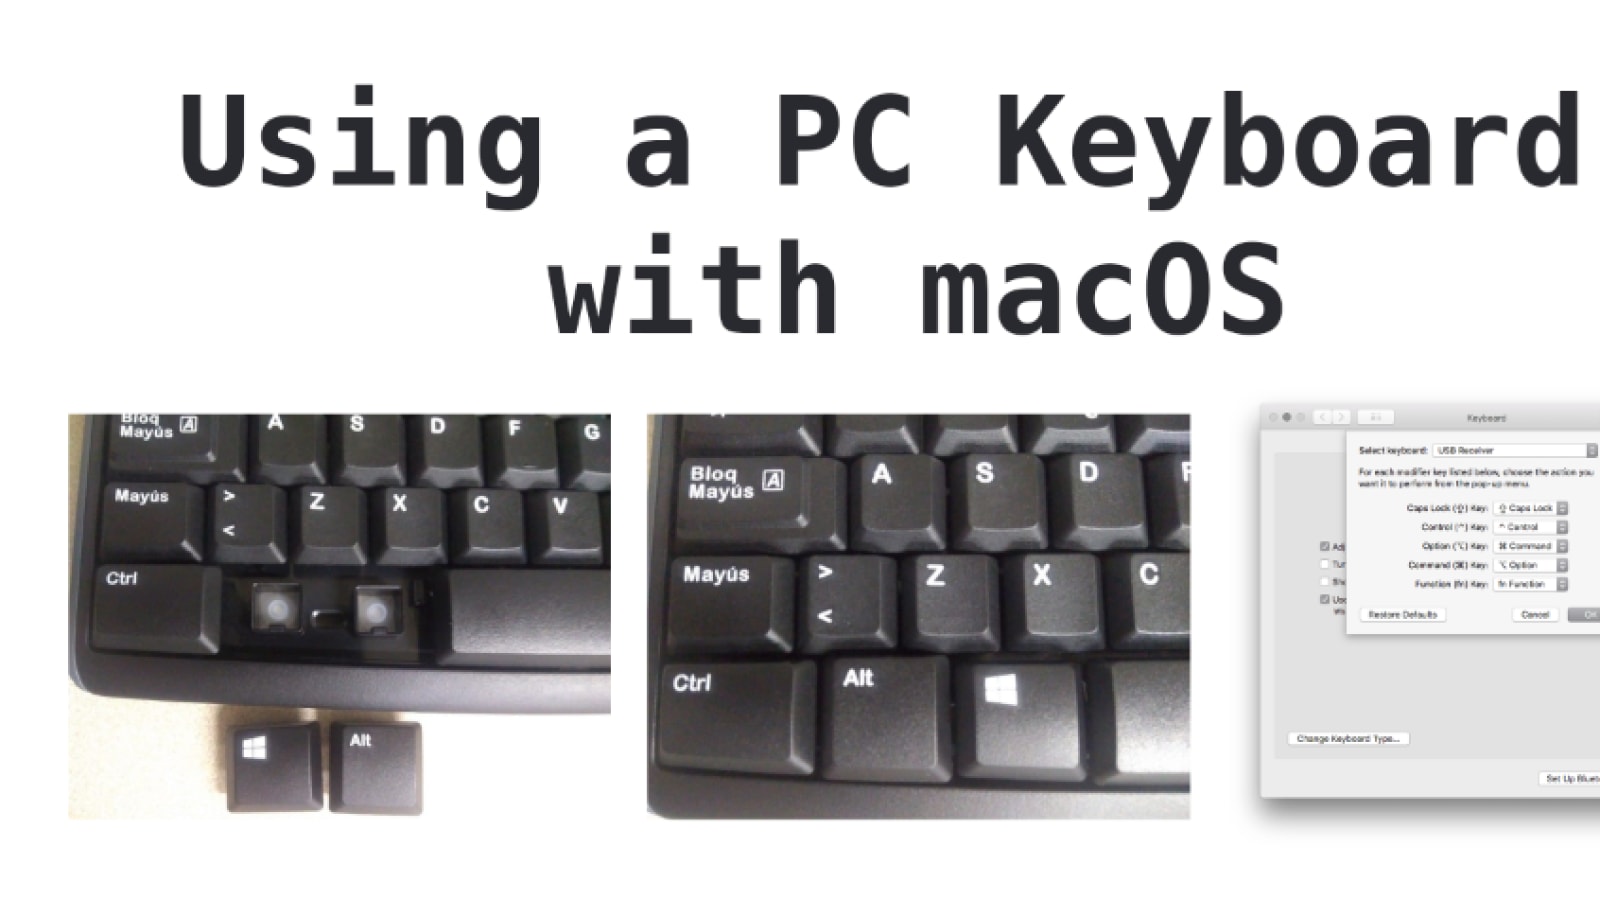 shortcut key for mac computer when using usb keyboard